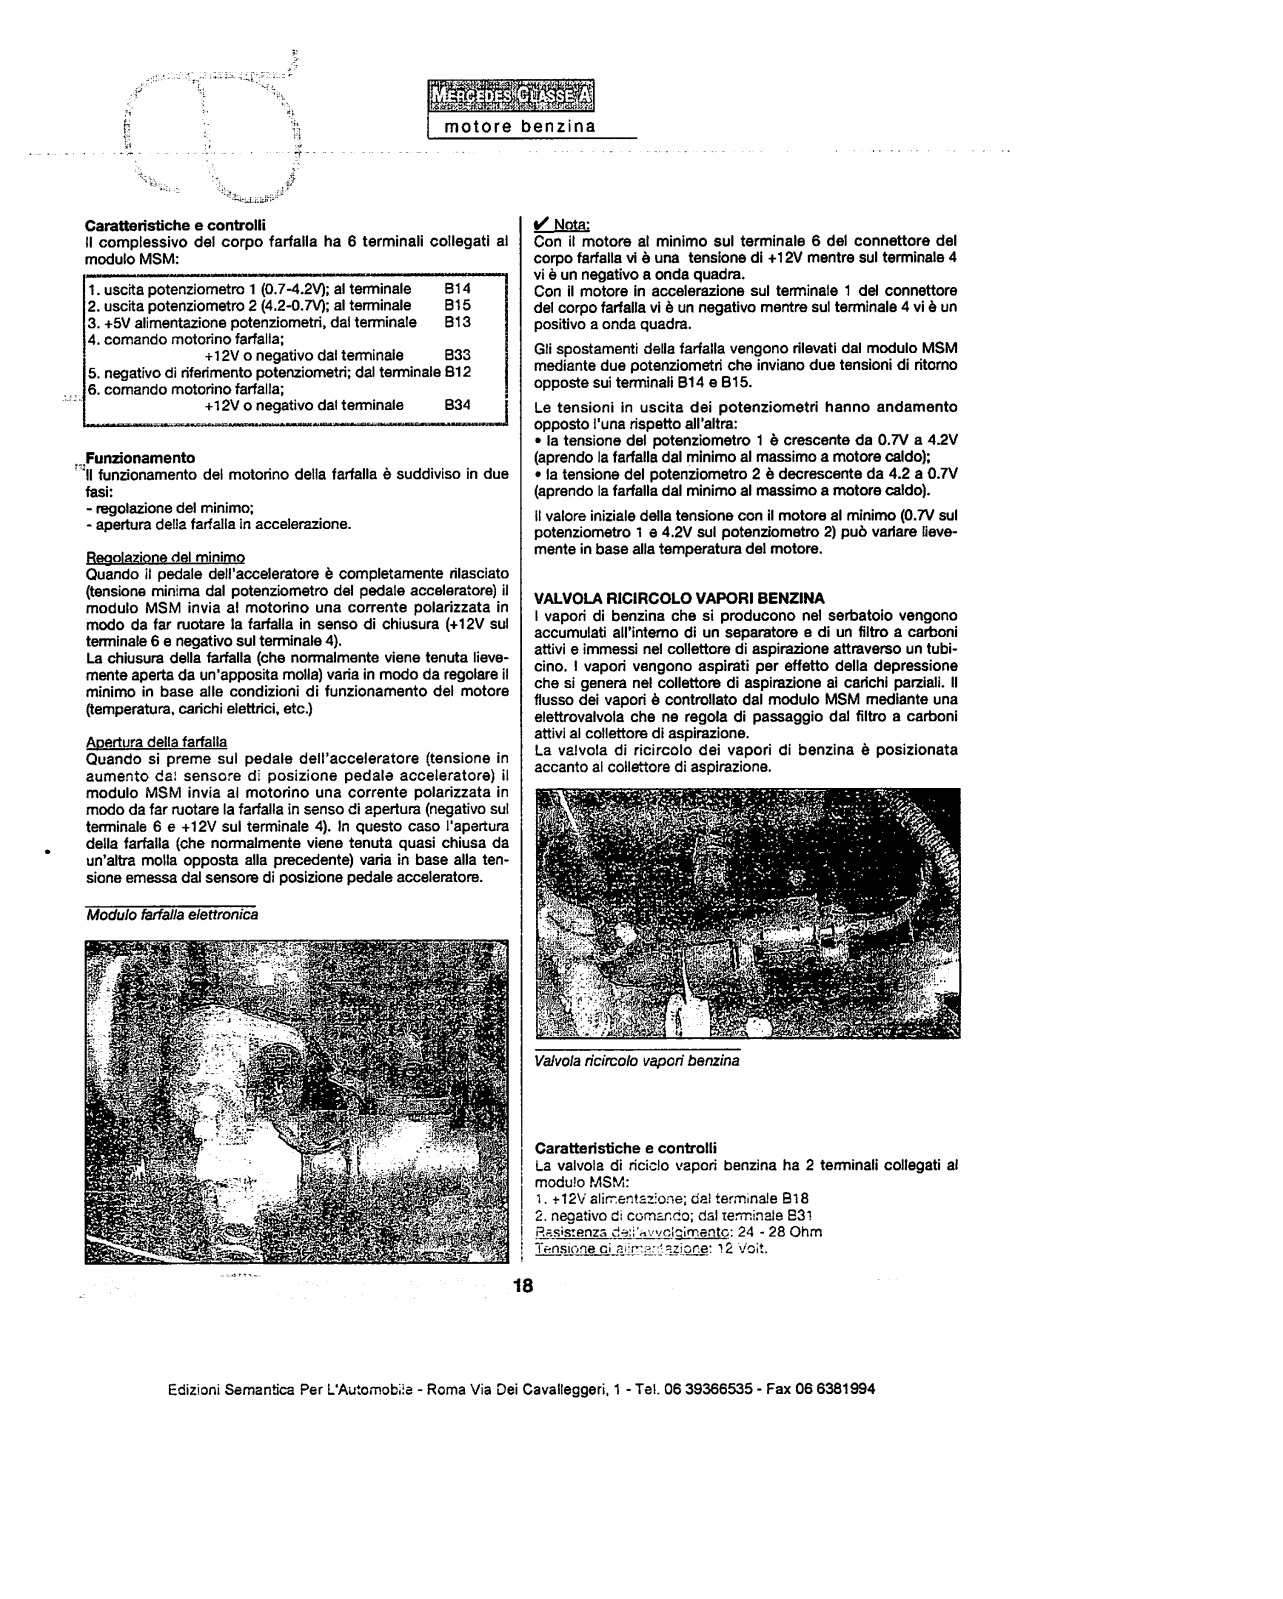 w168 - (W168): Manual técnico - tudo sobre - 1997 a 2004 - italiano Bfox21